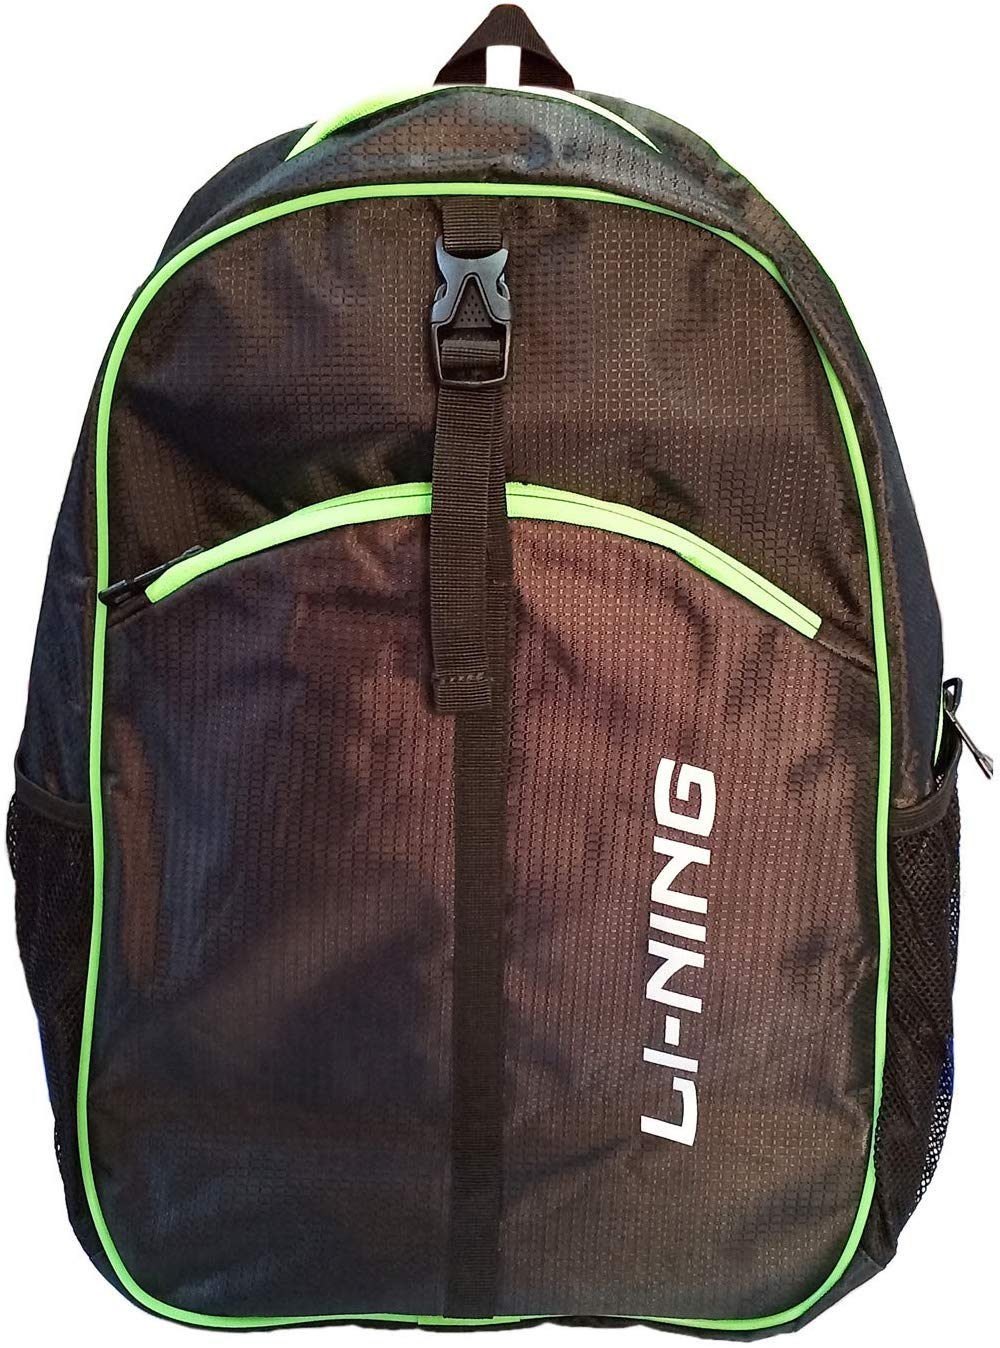 Li-Ning Sports Kitbag - Black Lime - Best Price online Prokicksports.com